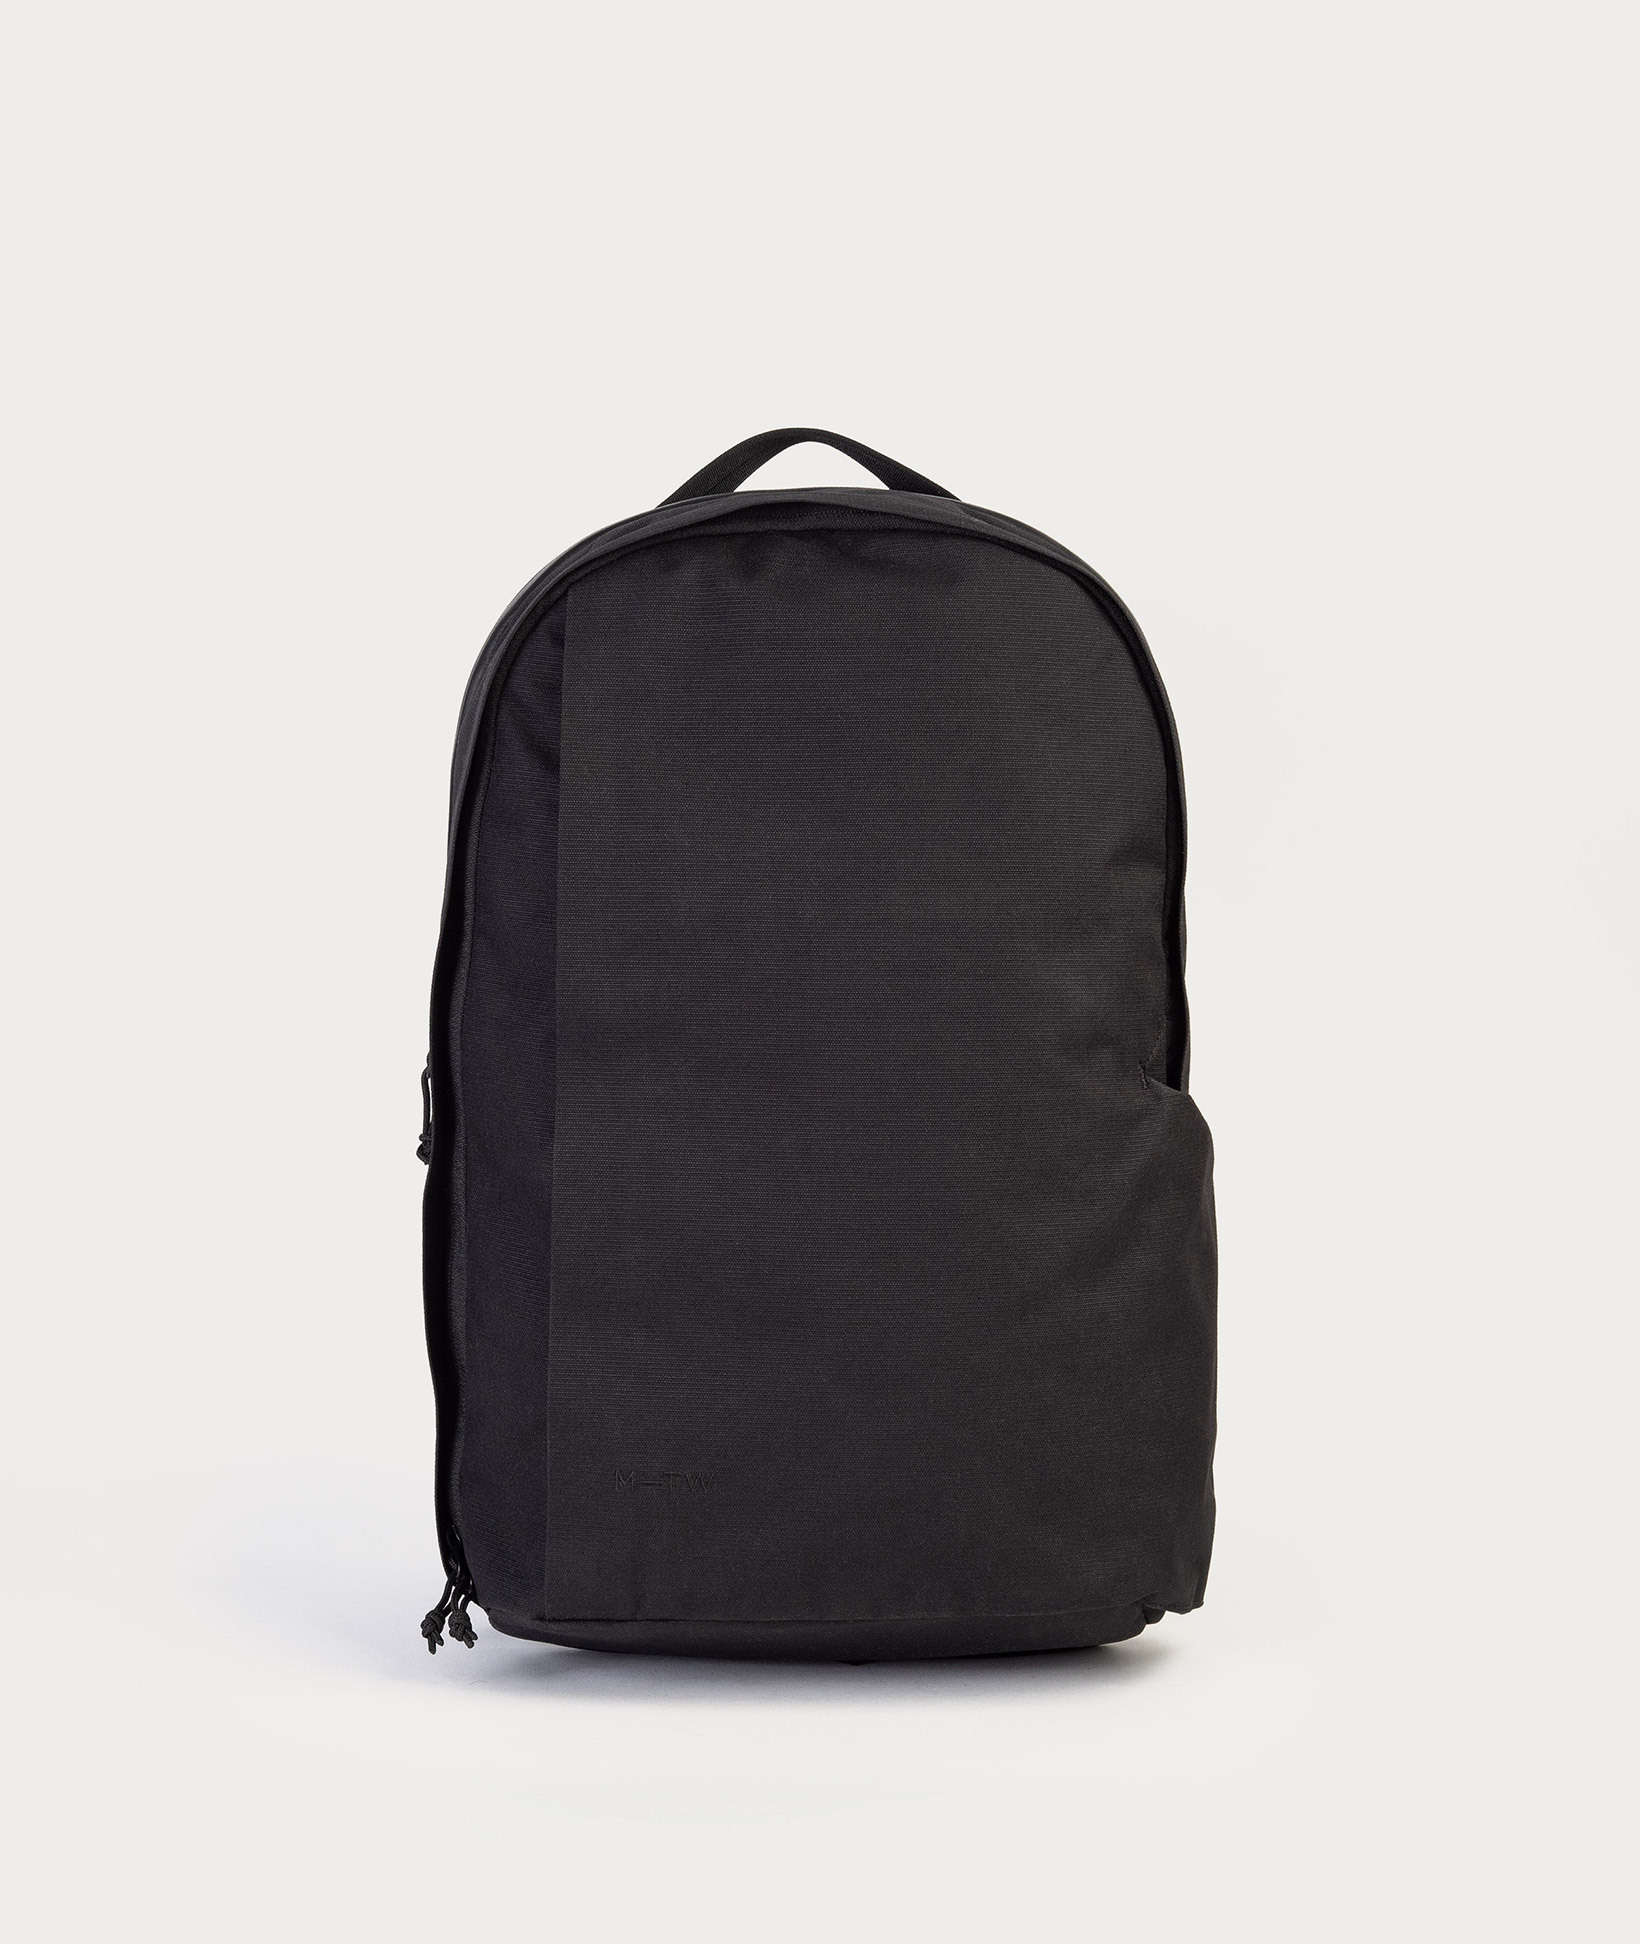 Moment MTW Backpack 21L - Black (106-137) - Moment